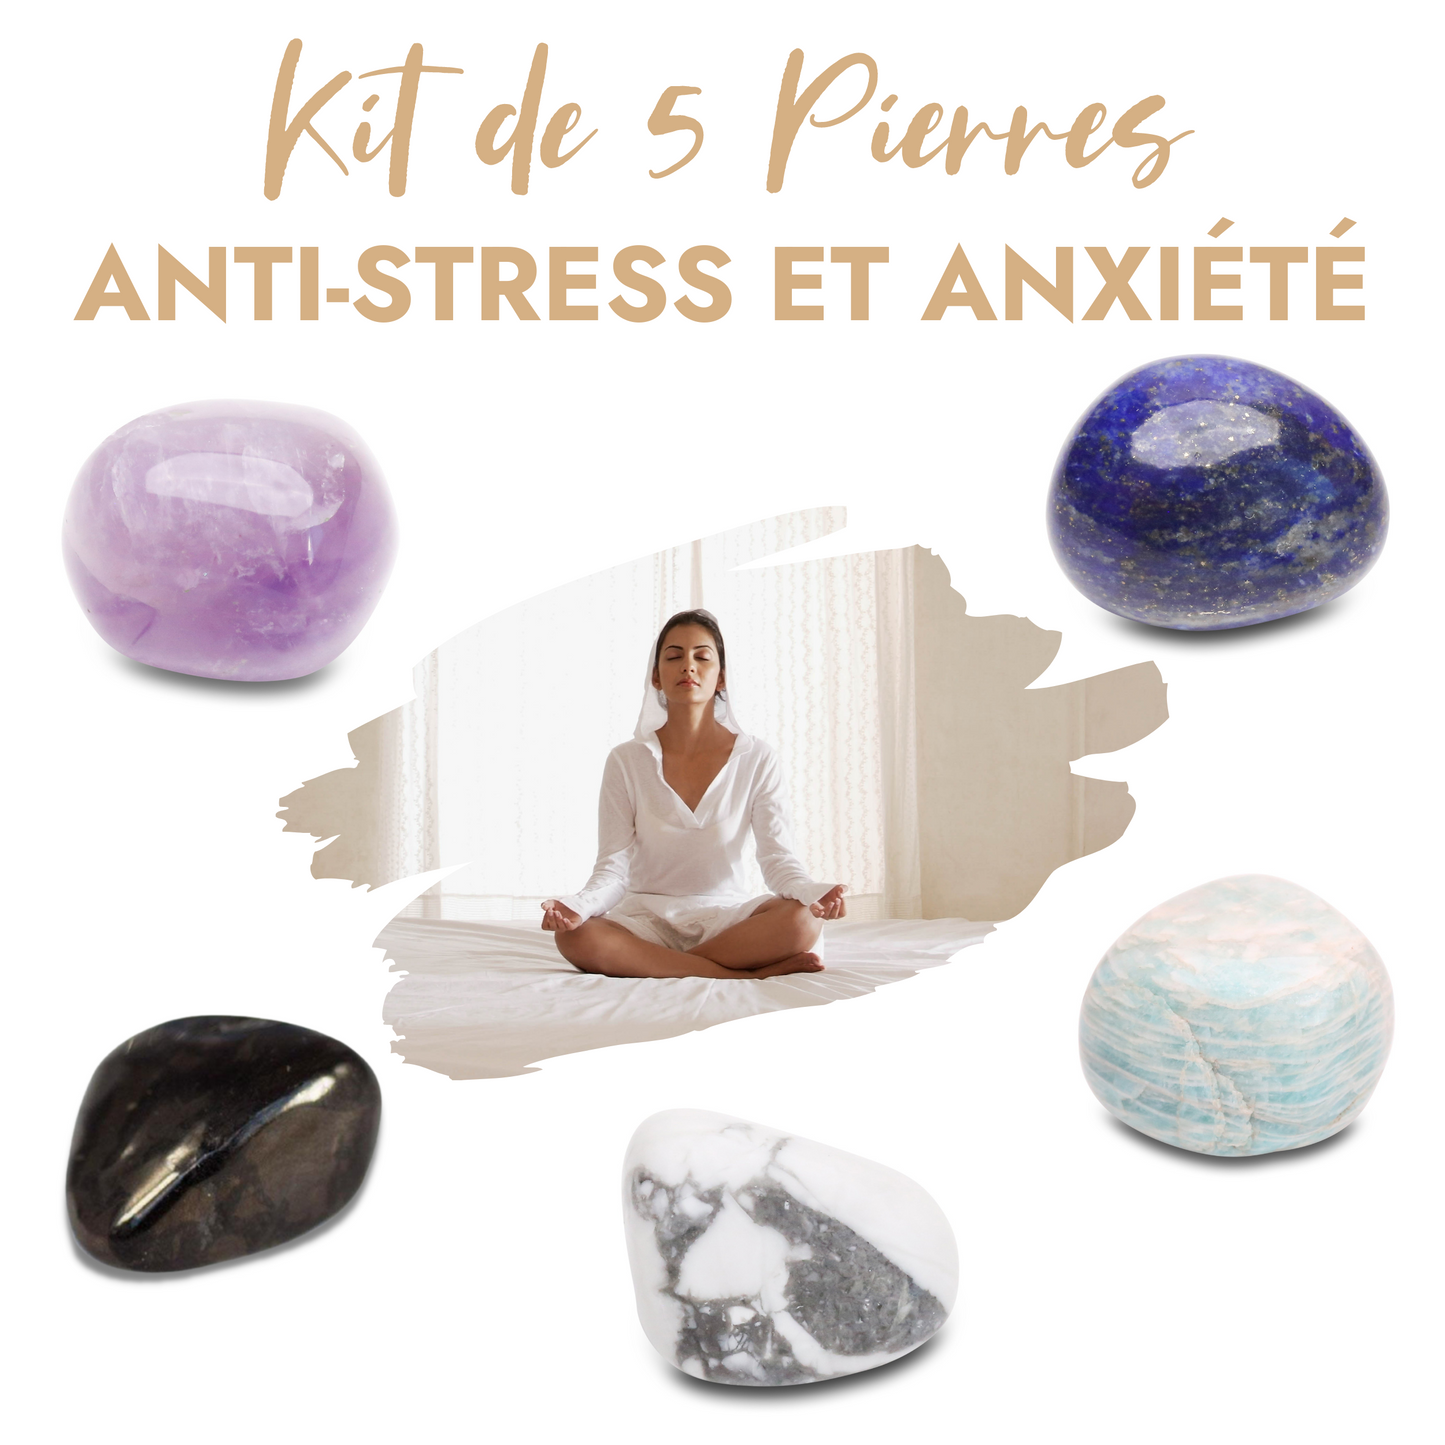 Kit de 5 pierres “Anti-Stress et Anxiété” - Karma Yoga Shop